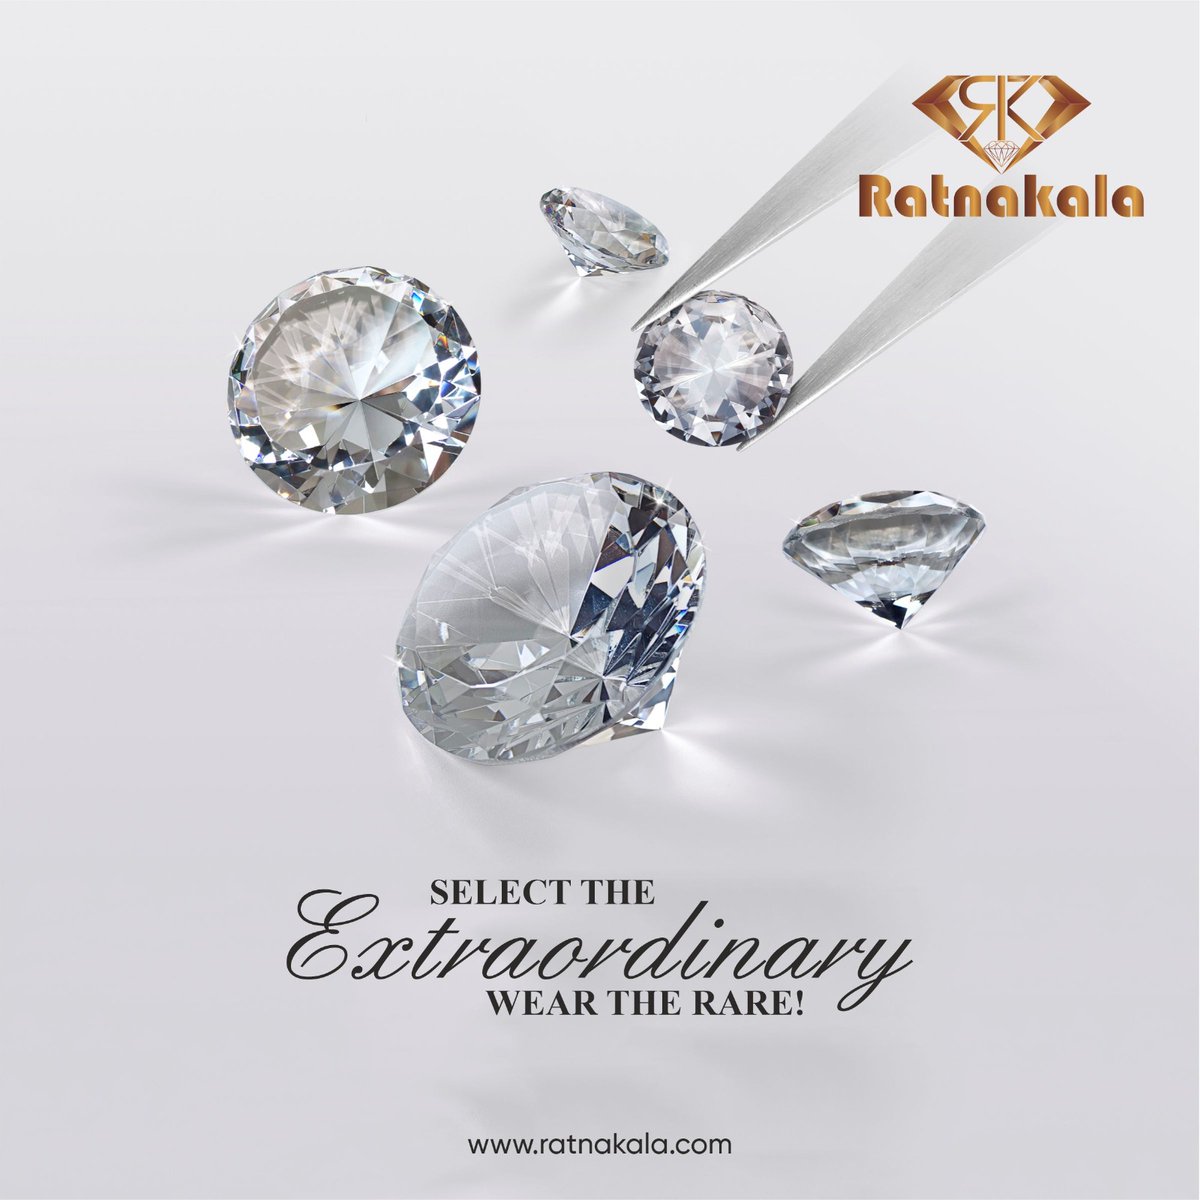 Select the extraordinary wear the rare!
.
Explore for more :
ratnakala.com
.
Contact Us👇
📞 +91 85911 08720
📧  online@ratnakala.com
.
#diamondmanufacturer #sparklingcreations #finejewelry #shinebright #luxurydiamonds #elegantgems #diamondcraftsmanship #dazzlinggems